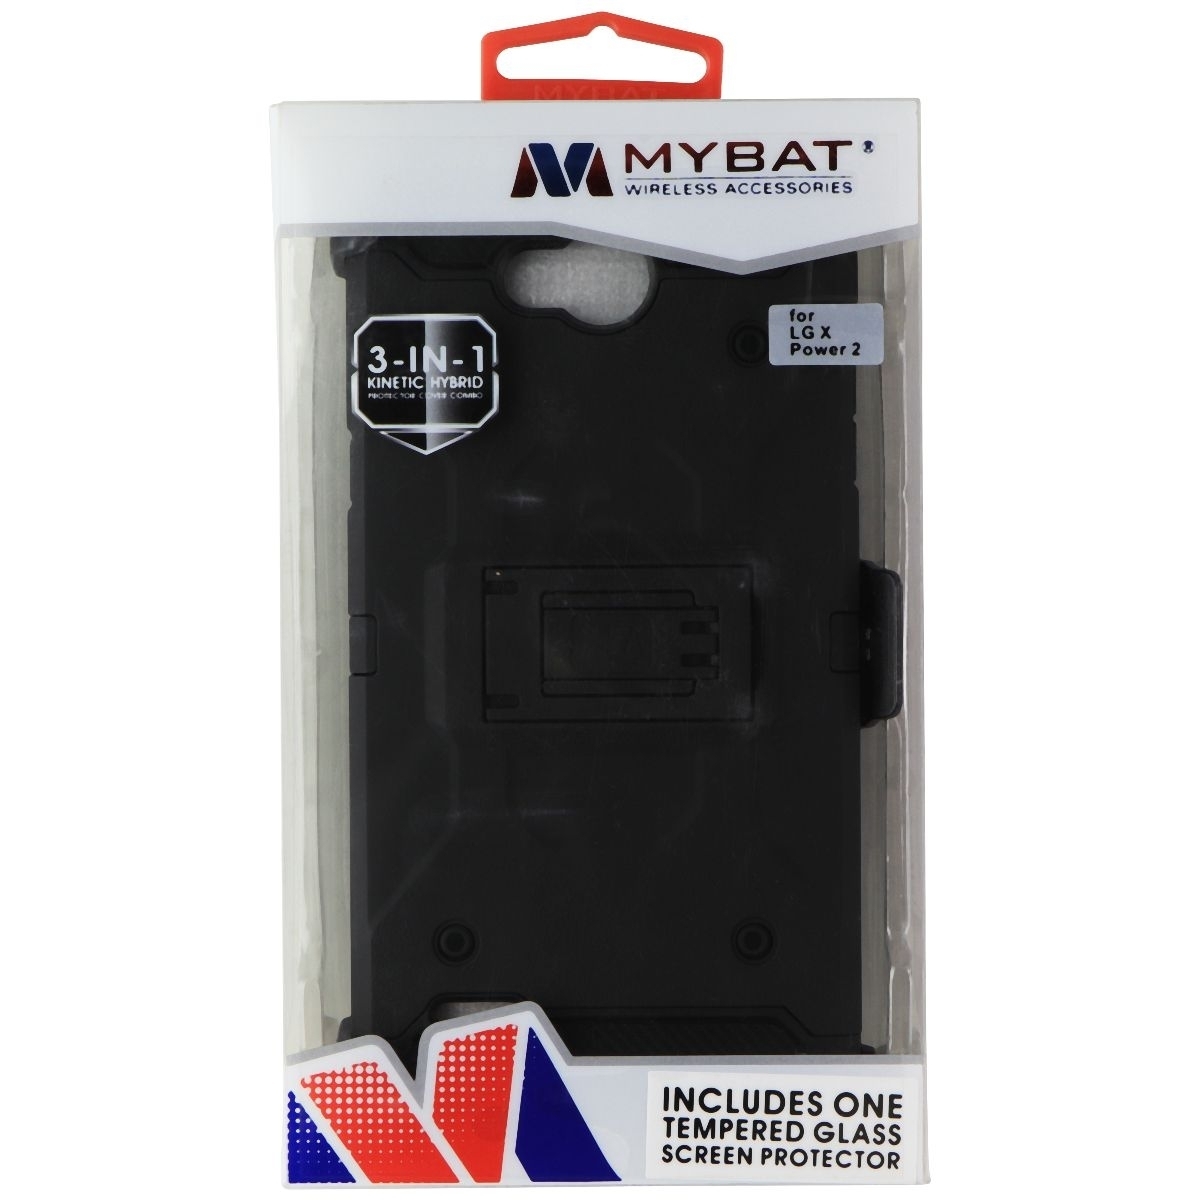 MyBat 3-in-1 Kinetic Hybrid Case W/ Tempered Glass For LG X Power 2 - Black (Refurbished)